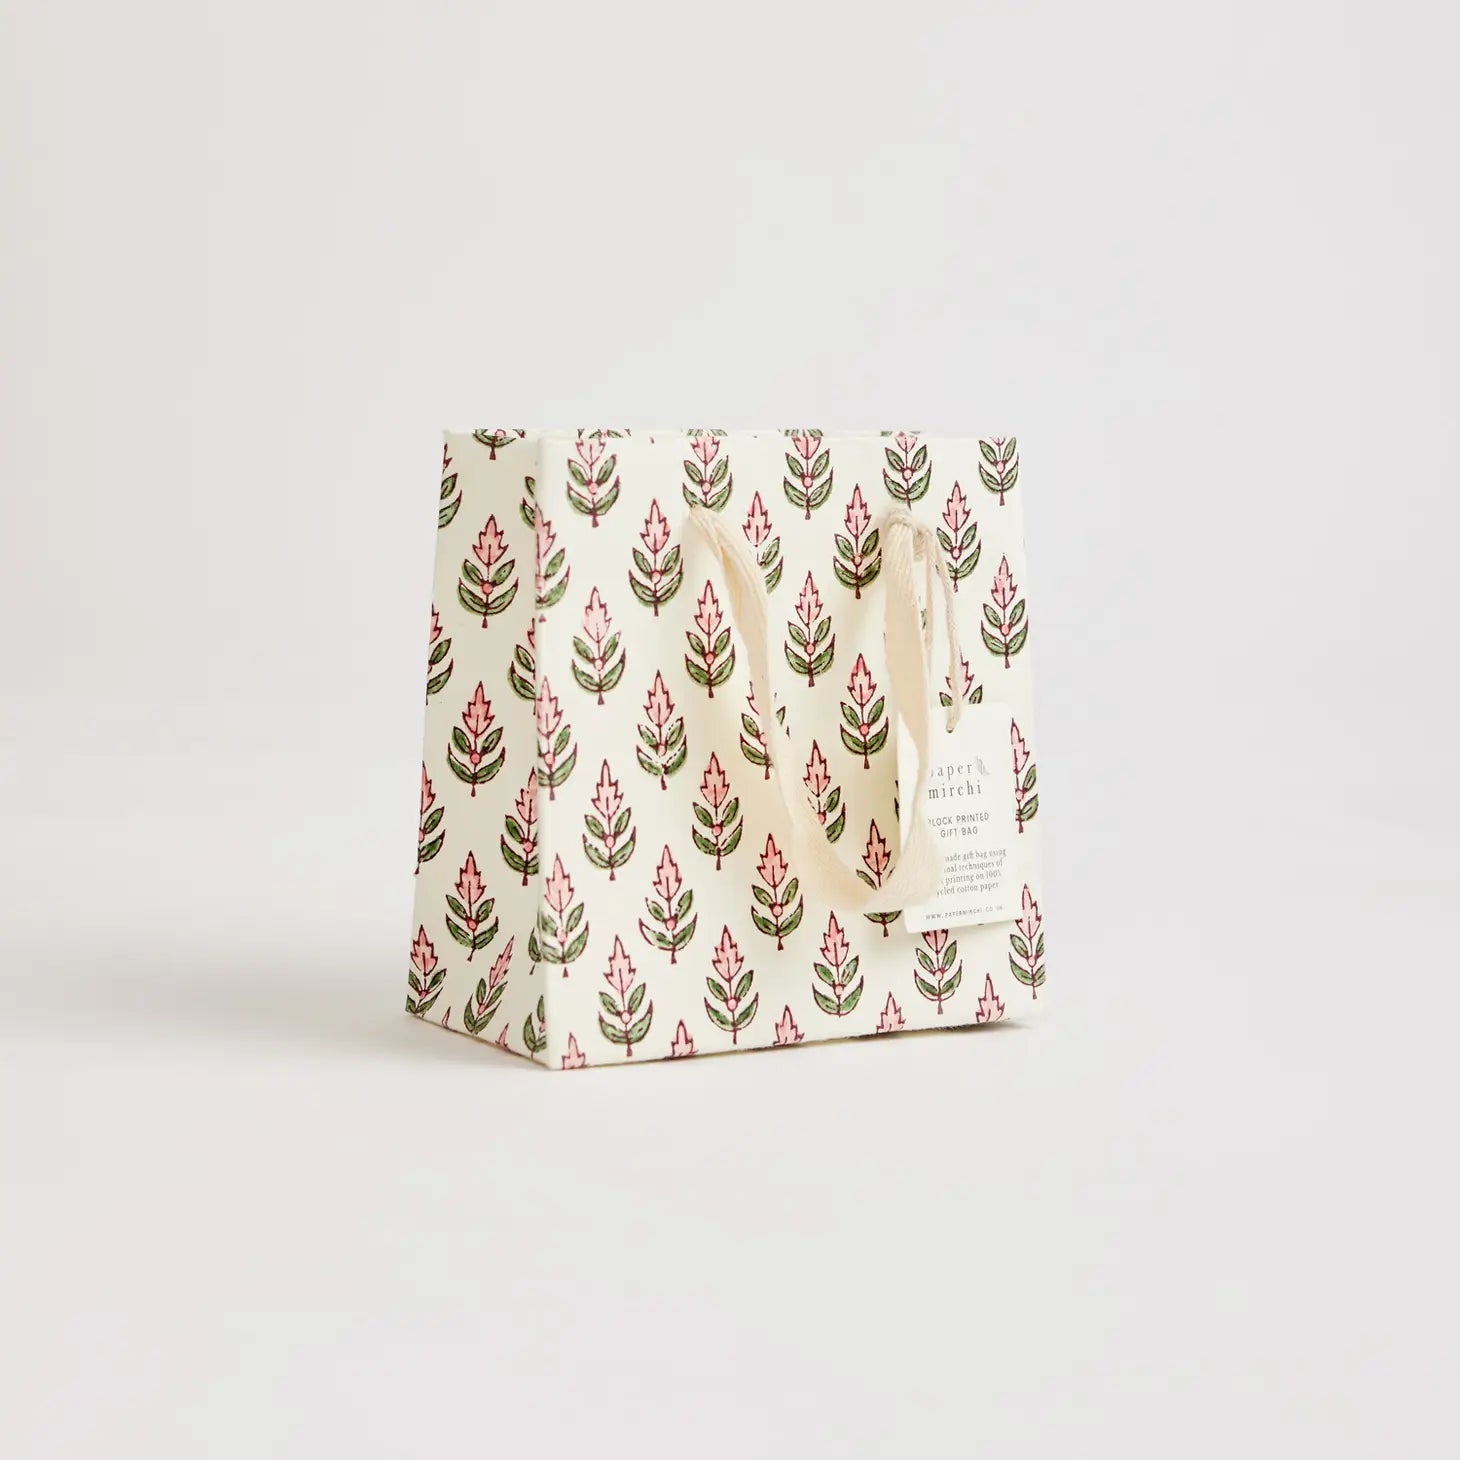 Blush Hand Block Printed Gift Bag - small / medium / large